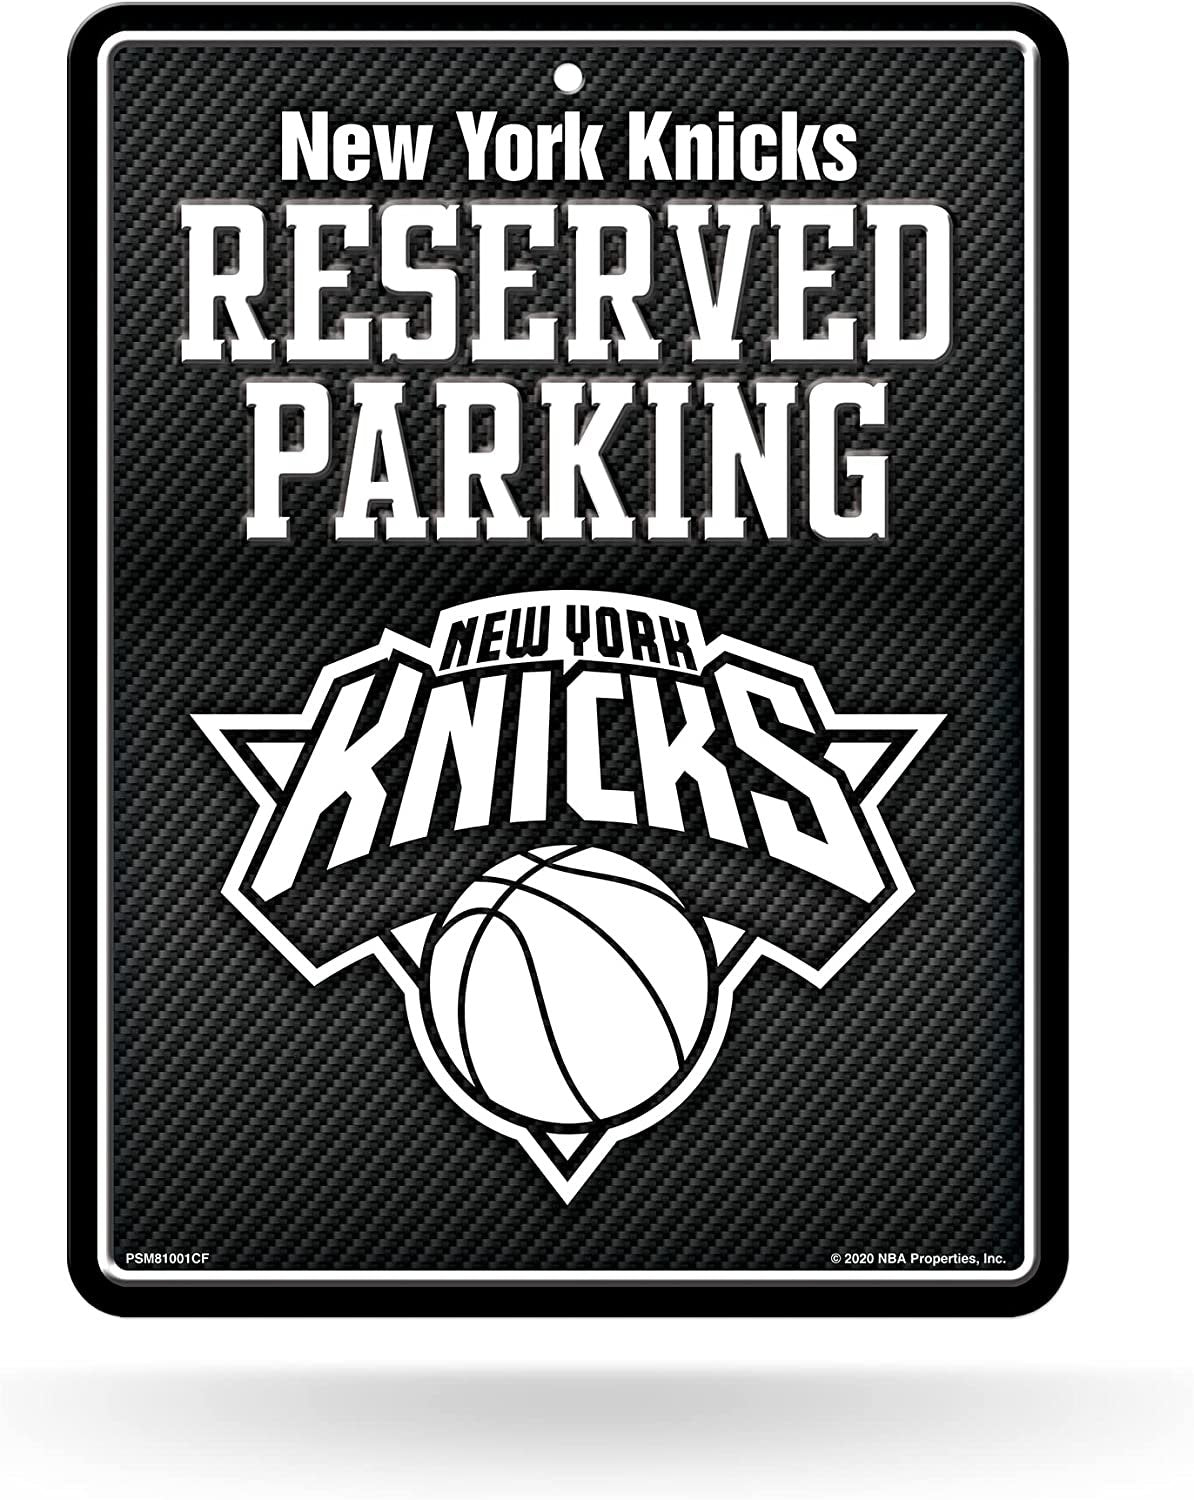 New York Knicks Metal Parking Novelty Wall Sign 8.5 x 11 Inch Carbon Fiber Design